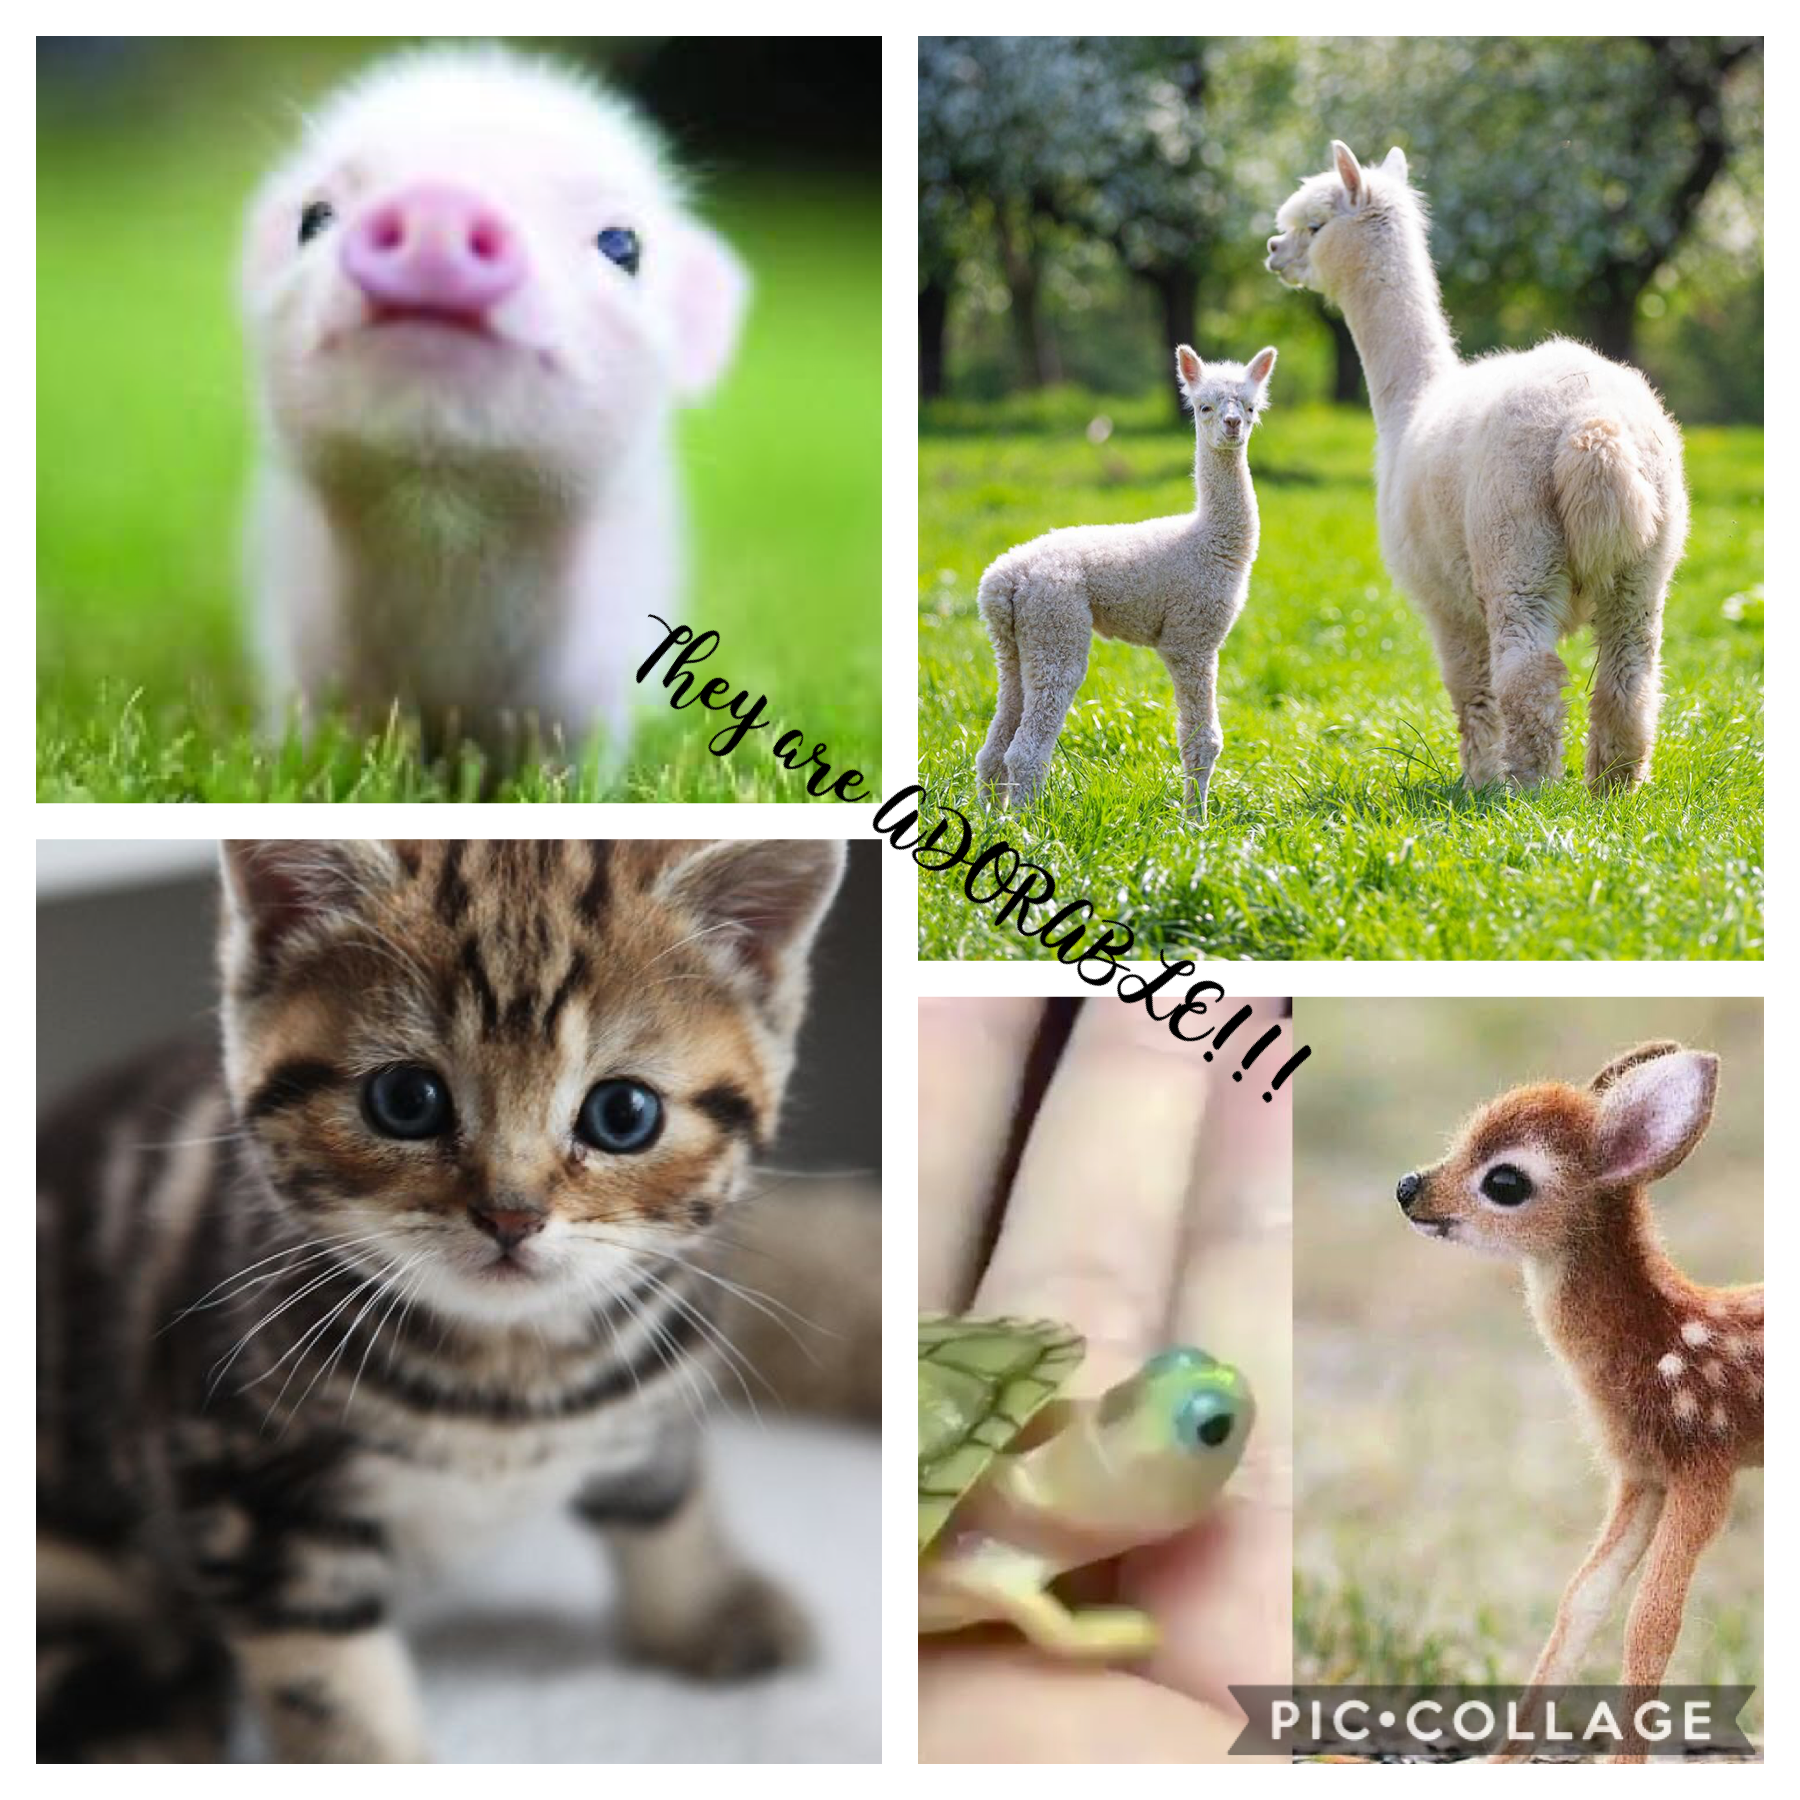 Aren’t these cute animals I love Baby animals!